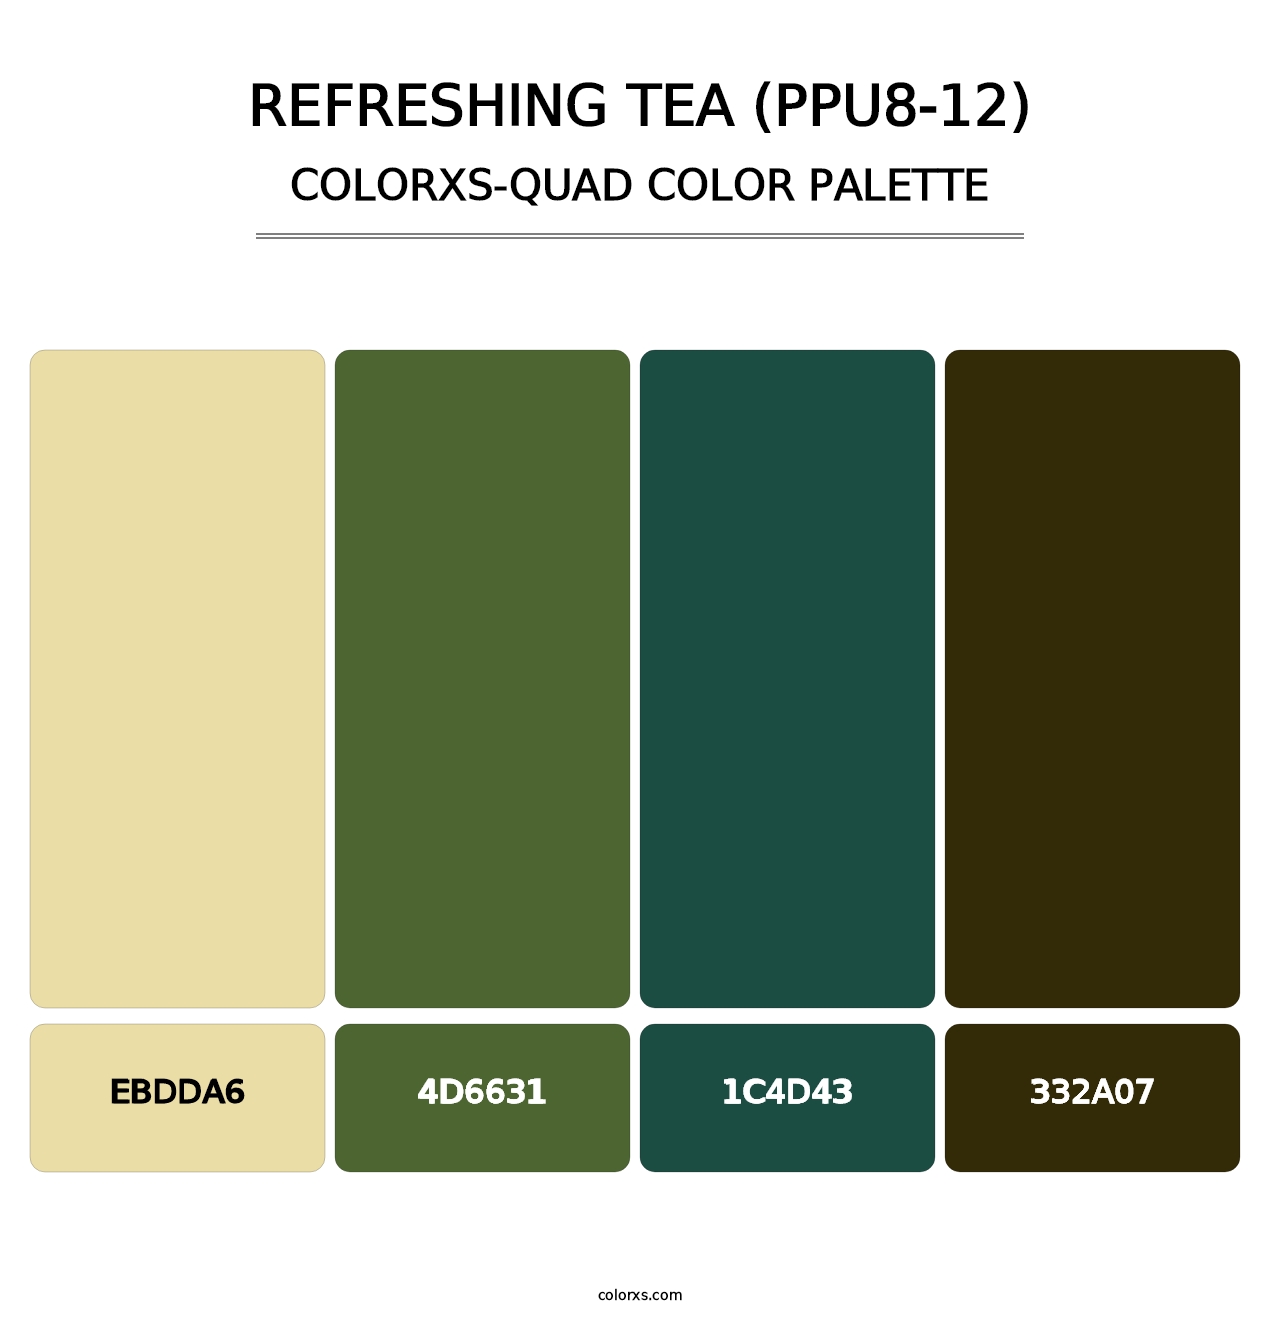 Refreshing Tea (PPU8-12) - Colorxs Quad Palette